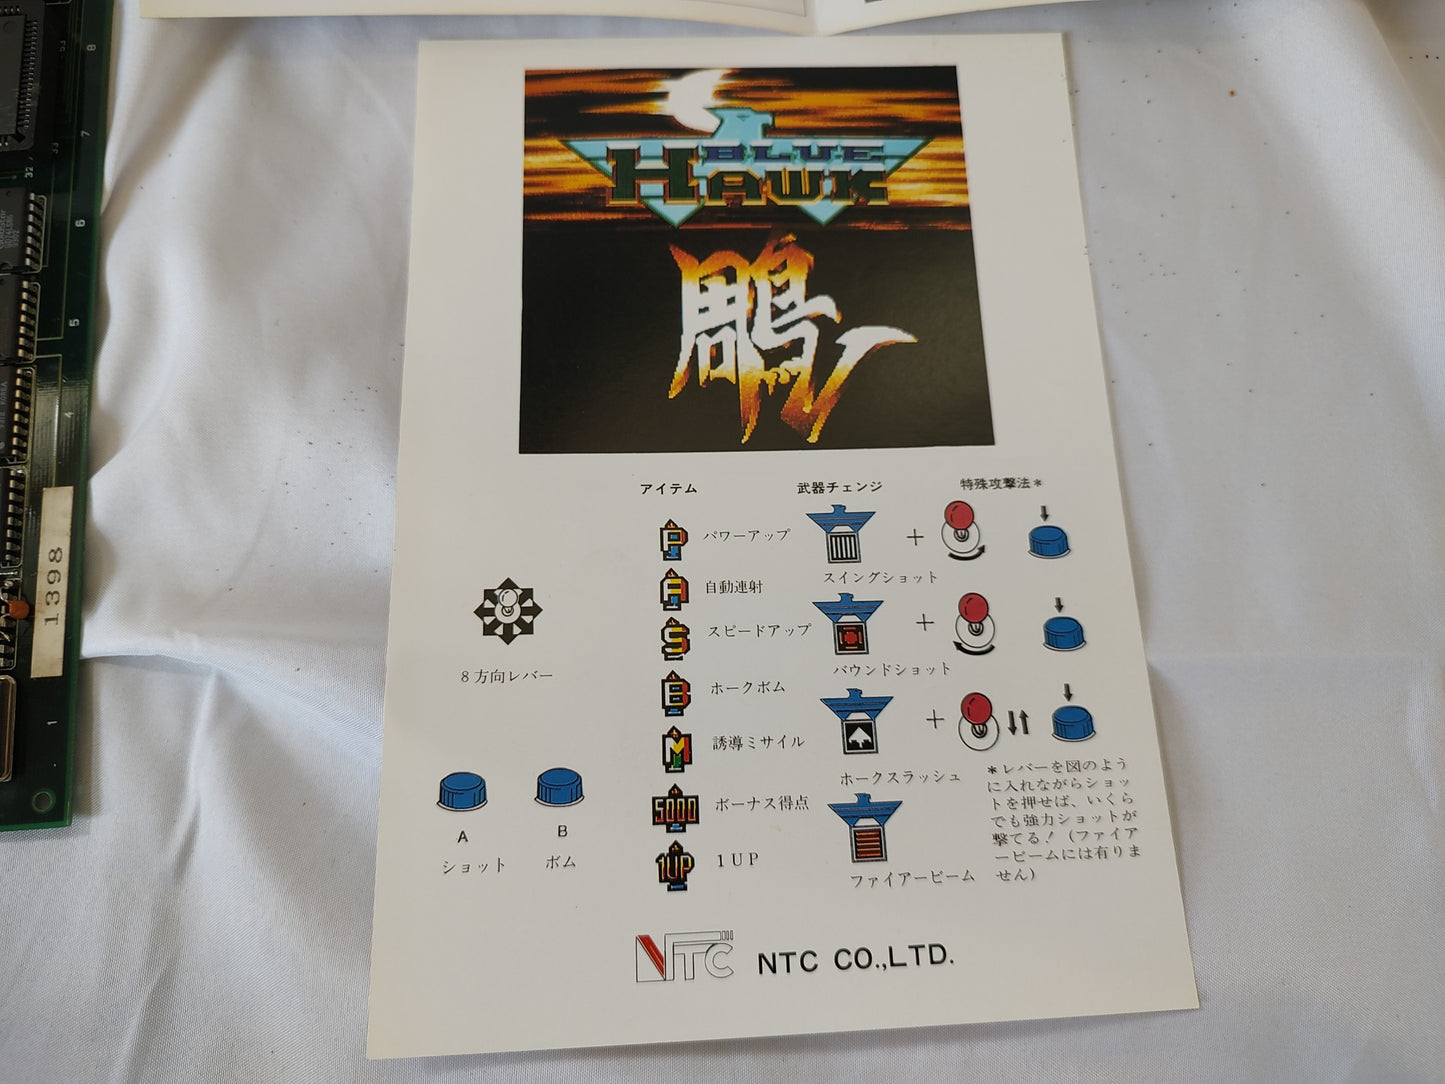 BLUE HAWK DOOYONG Arcade PCB System JAMMA Board, Inst card set, Working-f0206-